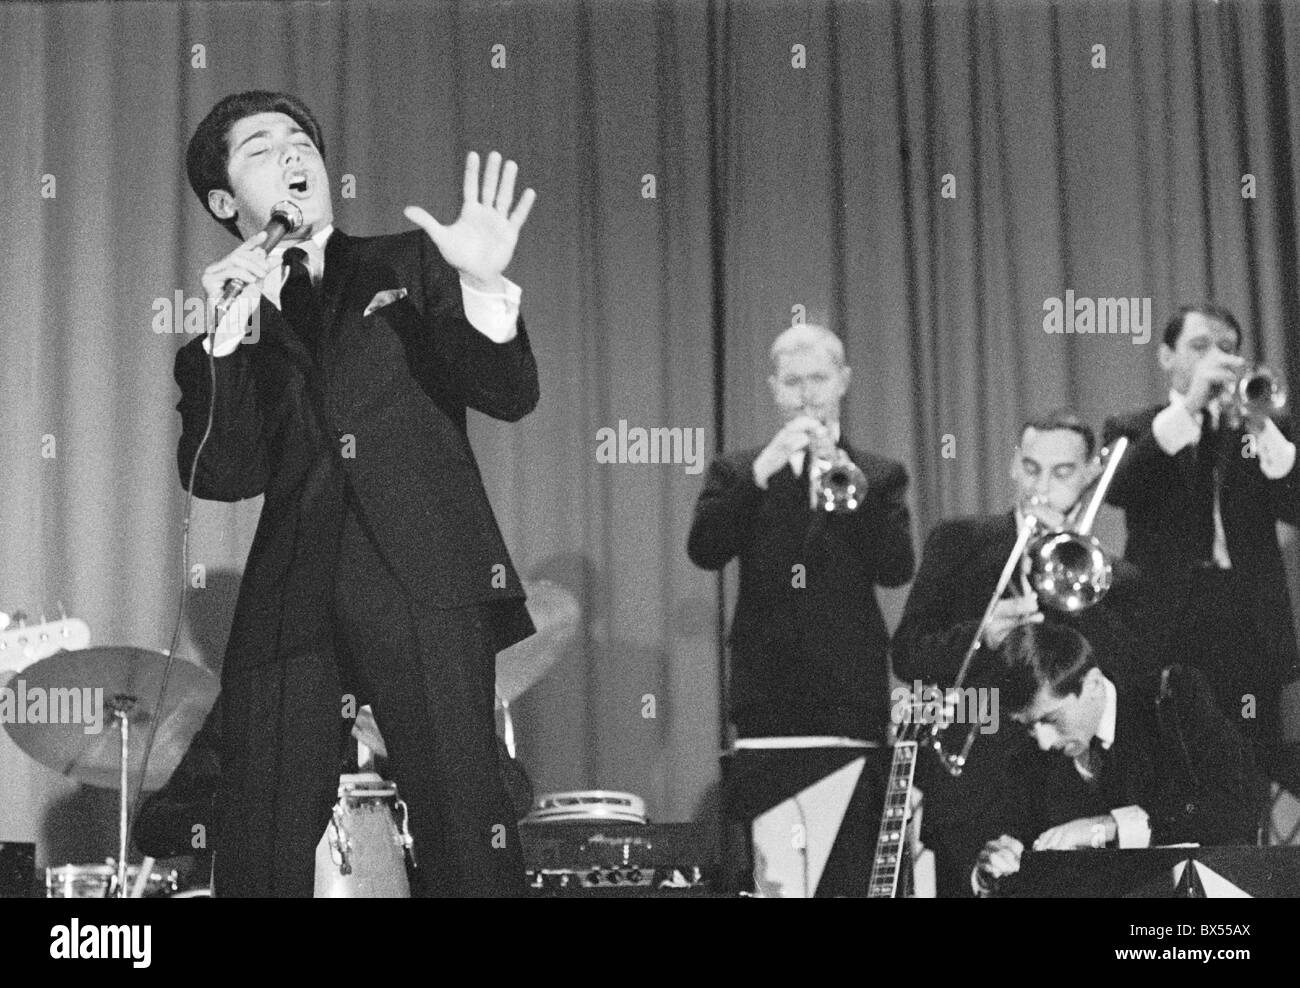 American - Canadian,  popular singer Paul Anka during his performance in Prague, Czechoslovakia 1966. (CTK Photo / Jovan Dezort) Stock Photo